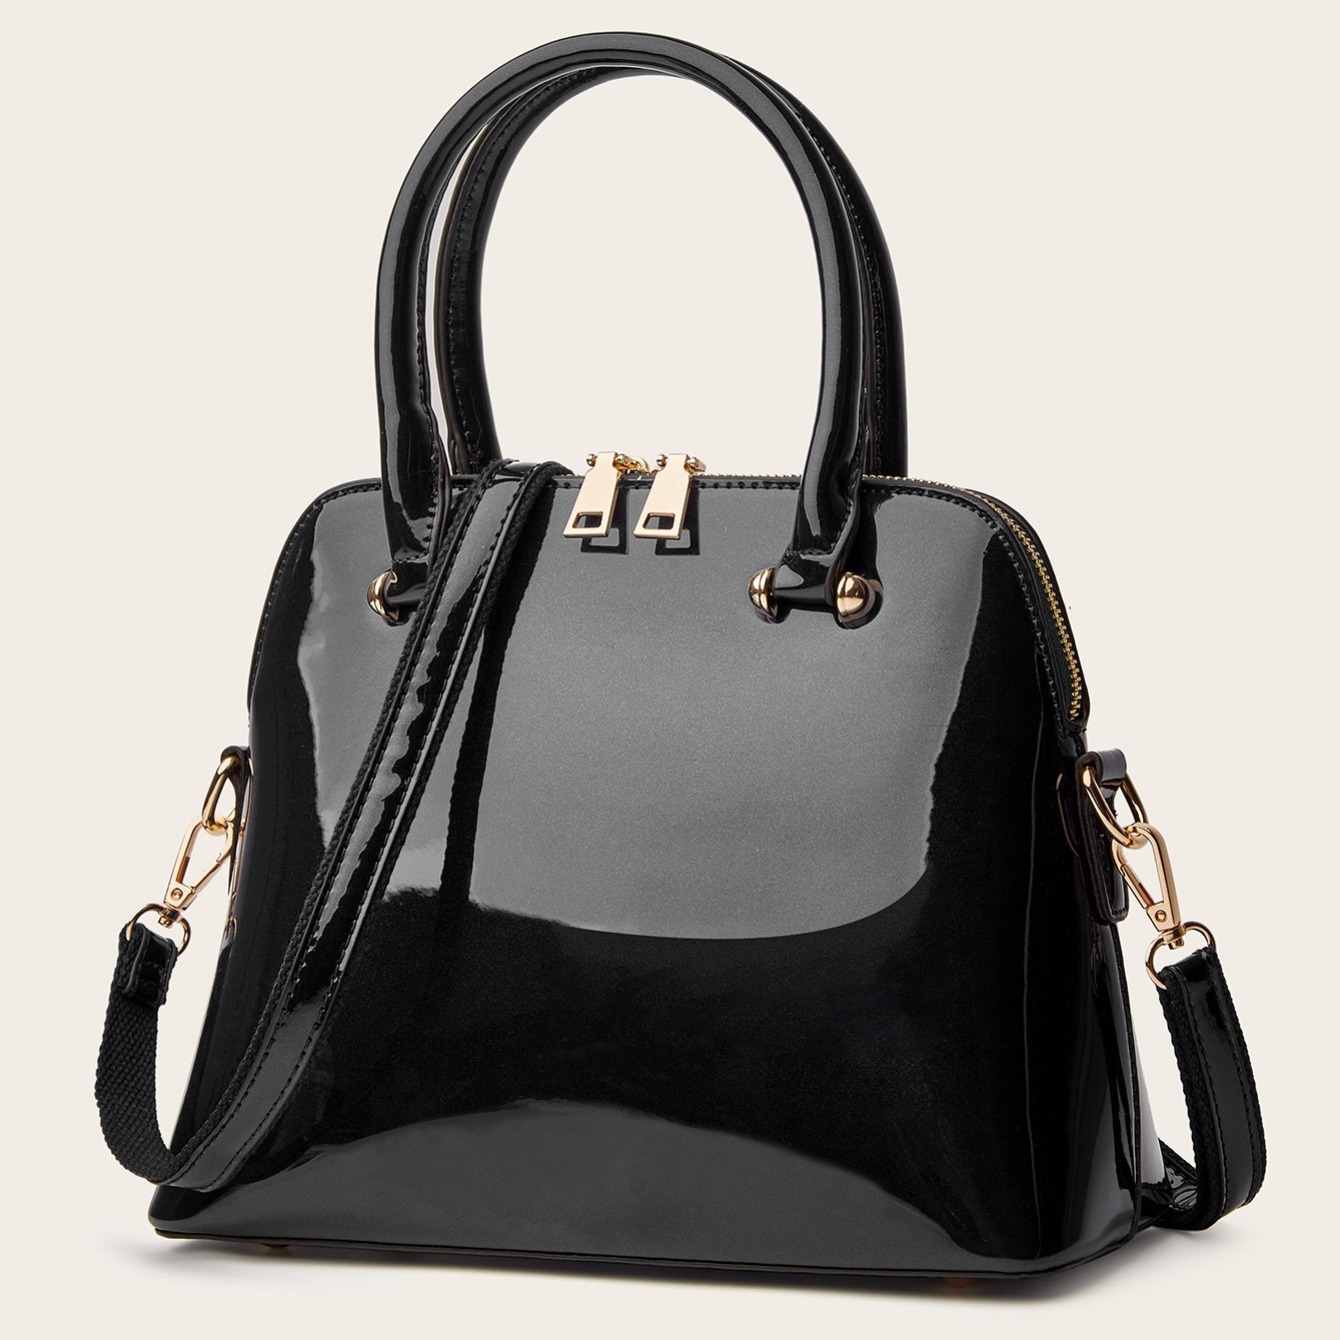  LJOSEIND Shiny Patent Leather Handbags Shoulder Bags